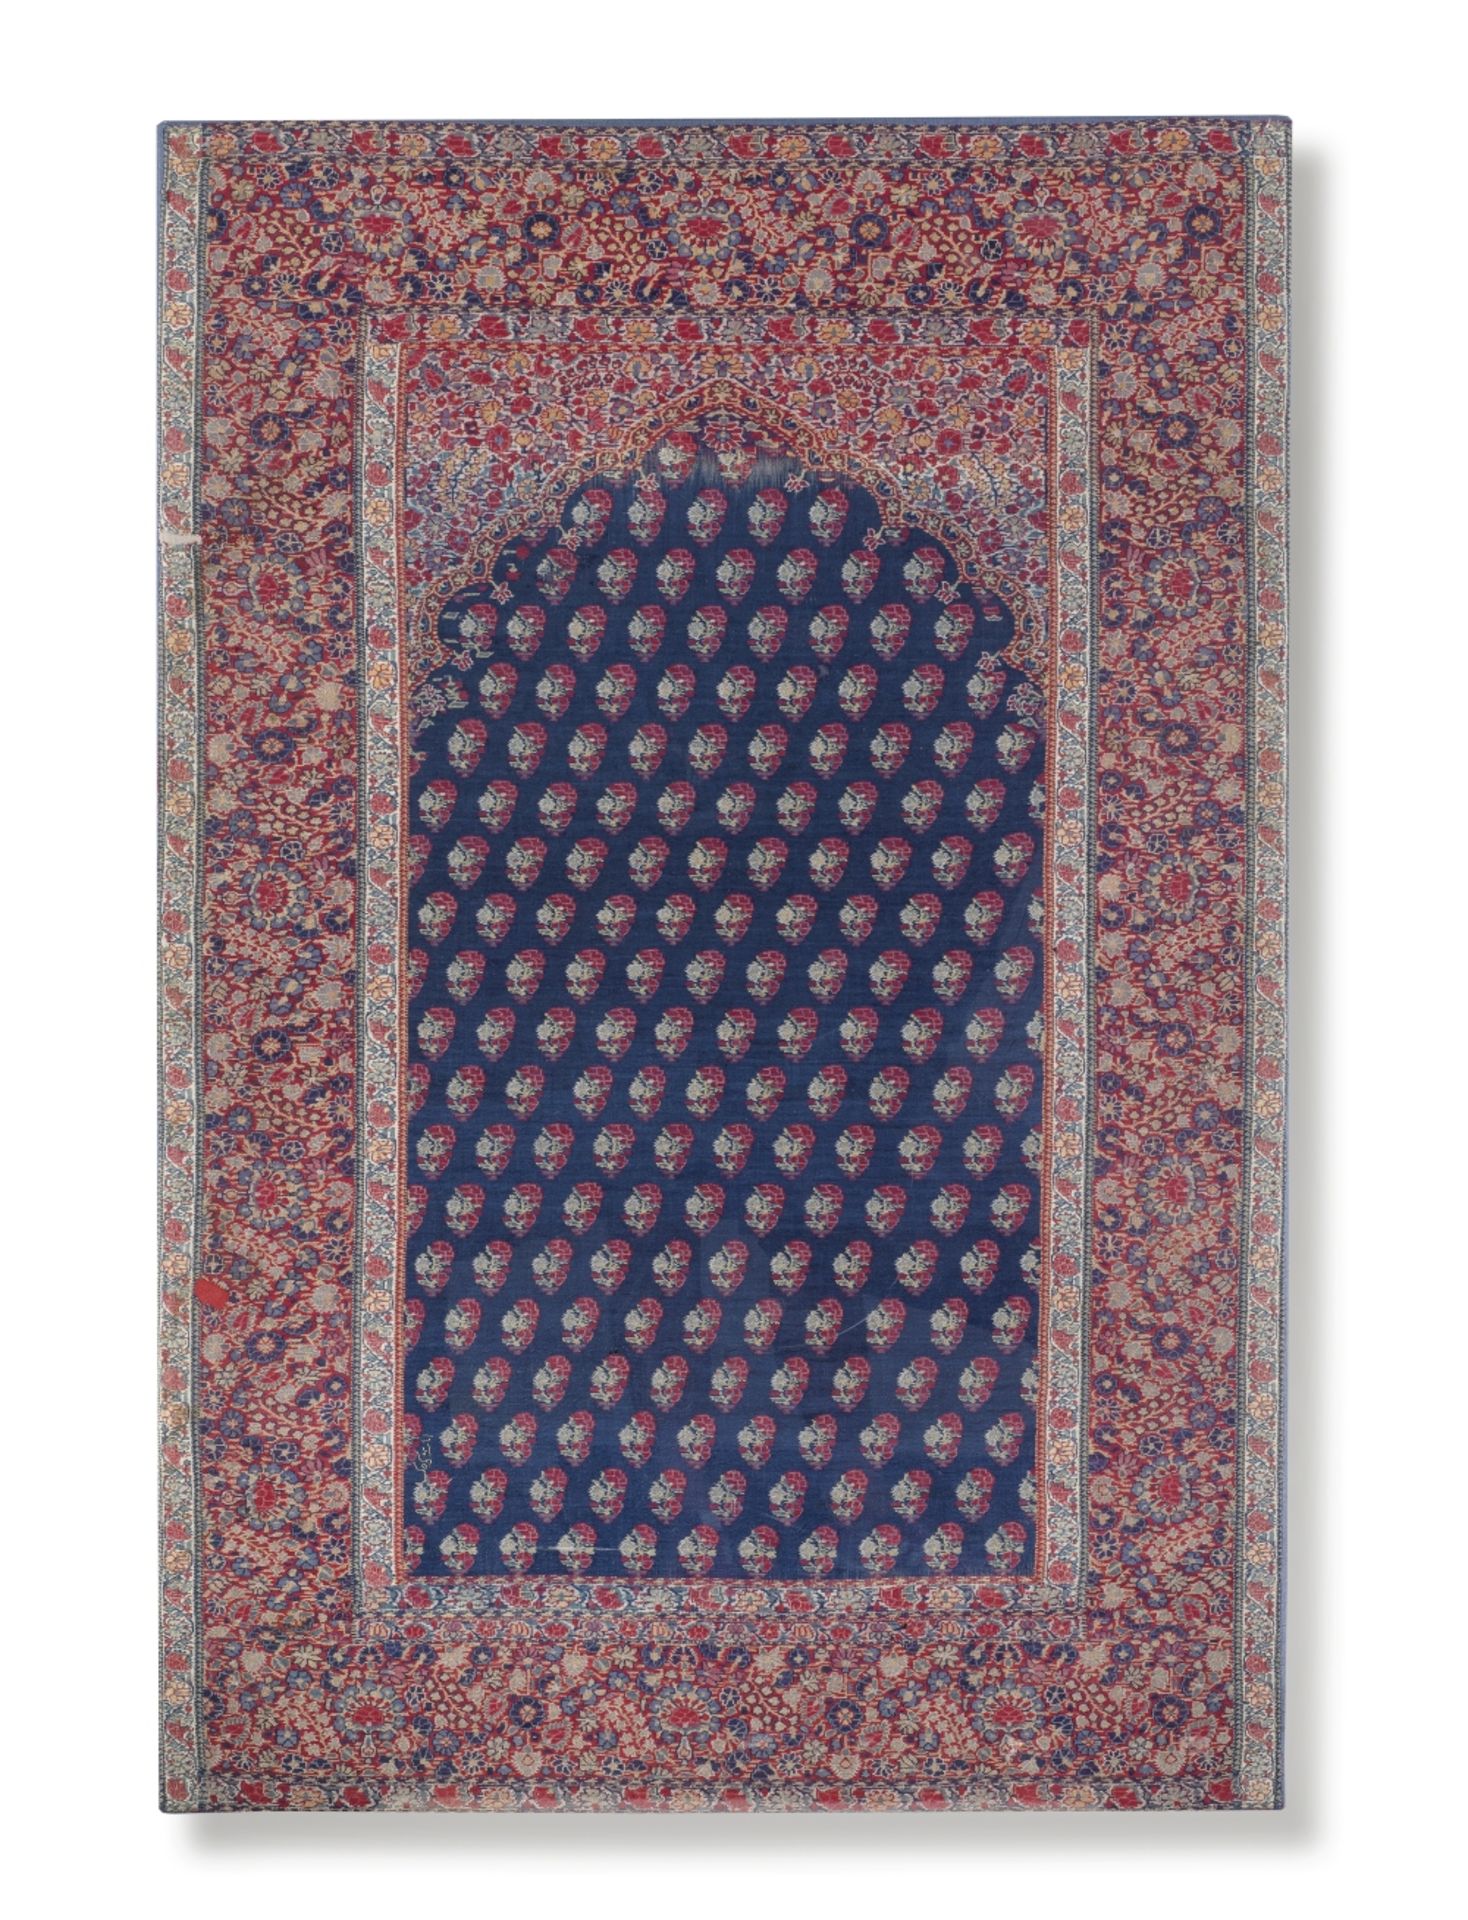 A fine woven wool kani prayer hanging or mat Kashmir, late 18th Century